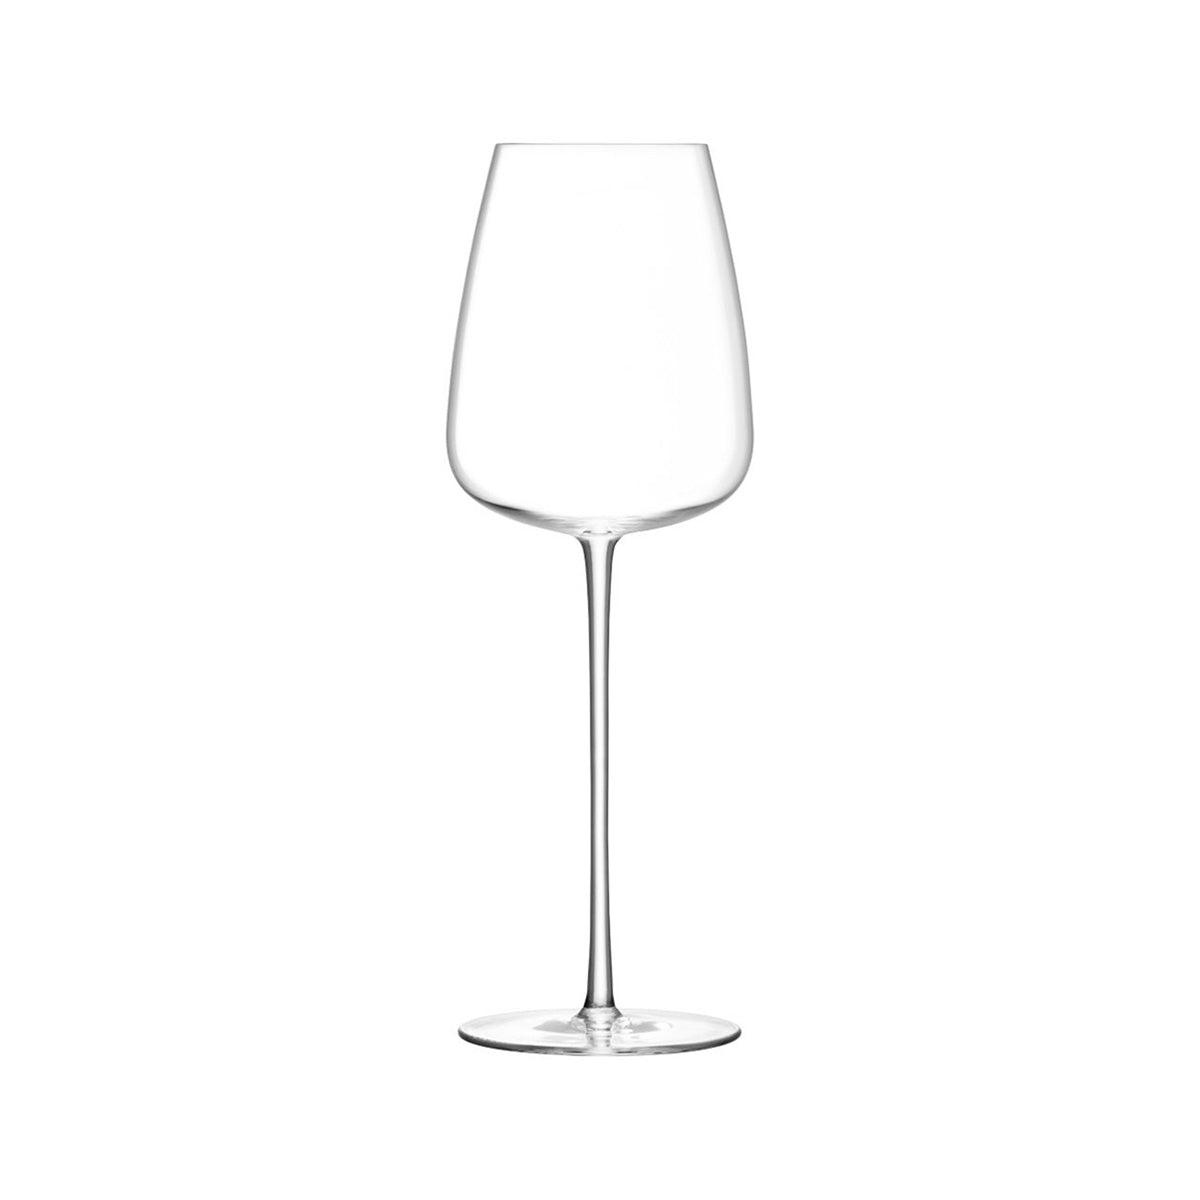 Pair of White Wine Glasses